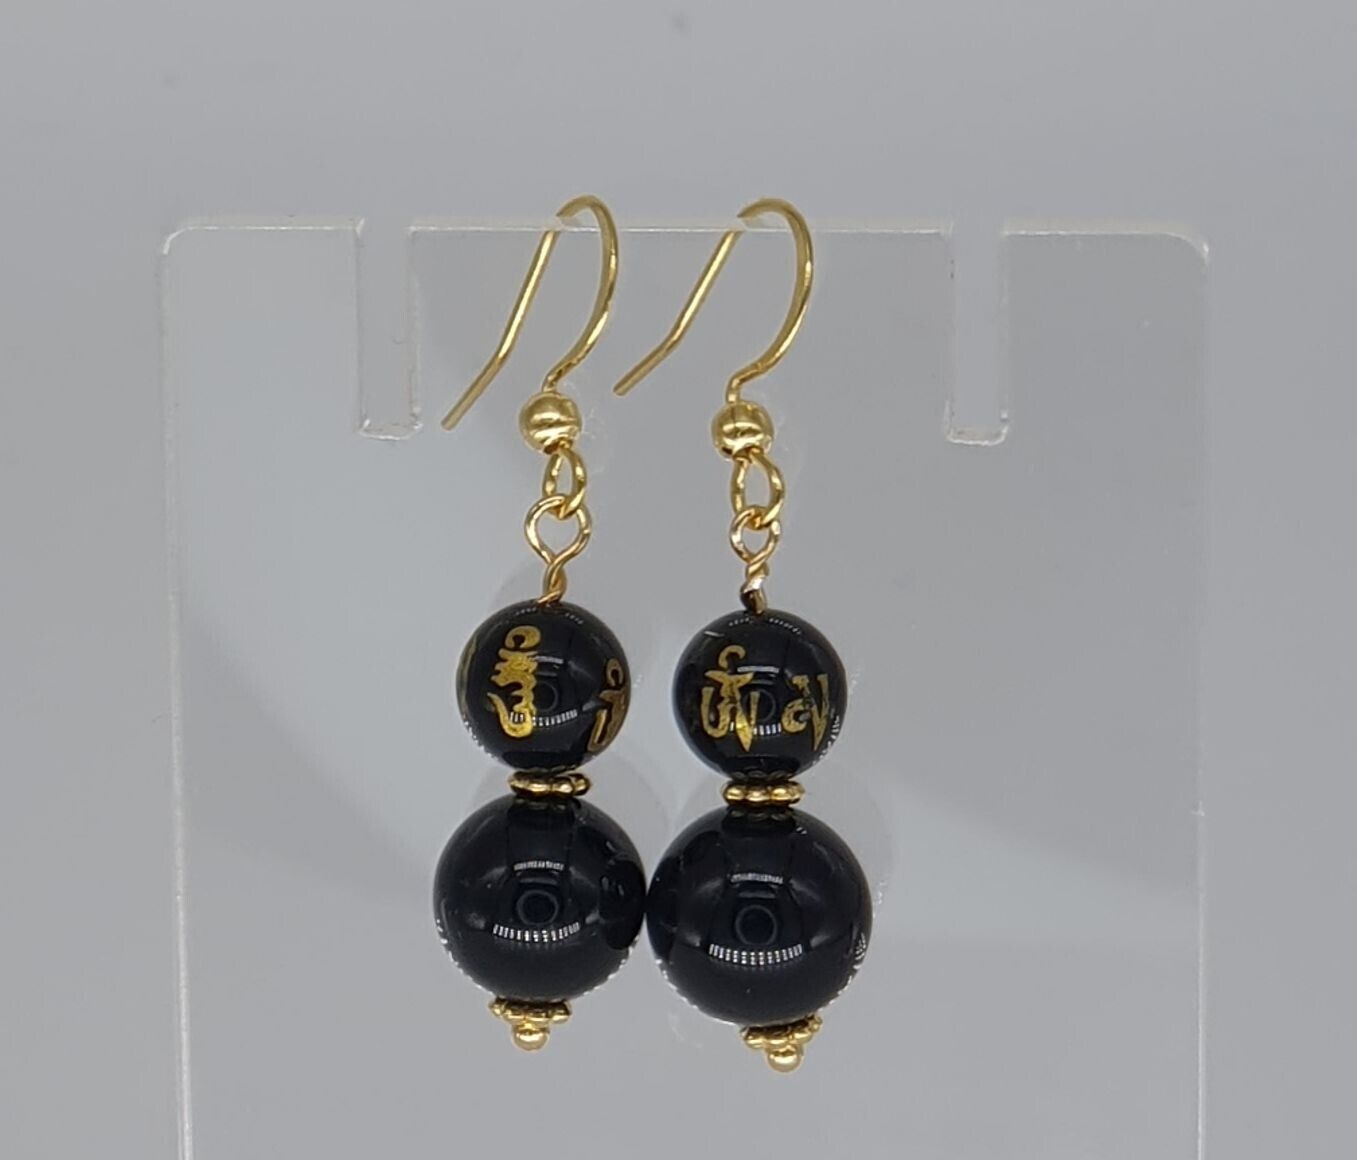 Om Mani Padme Hum Mantra Black Obsidian Earrings 18K Gold Plated